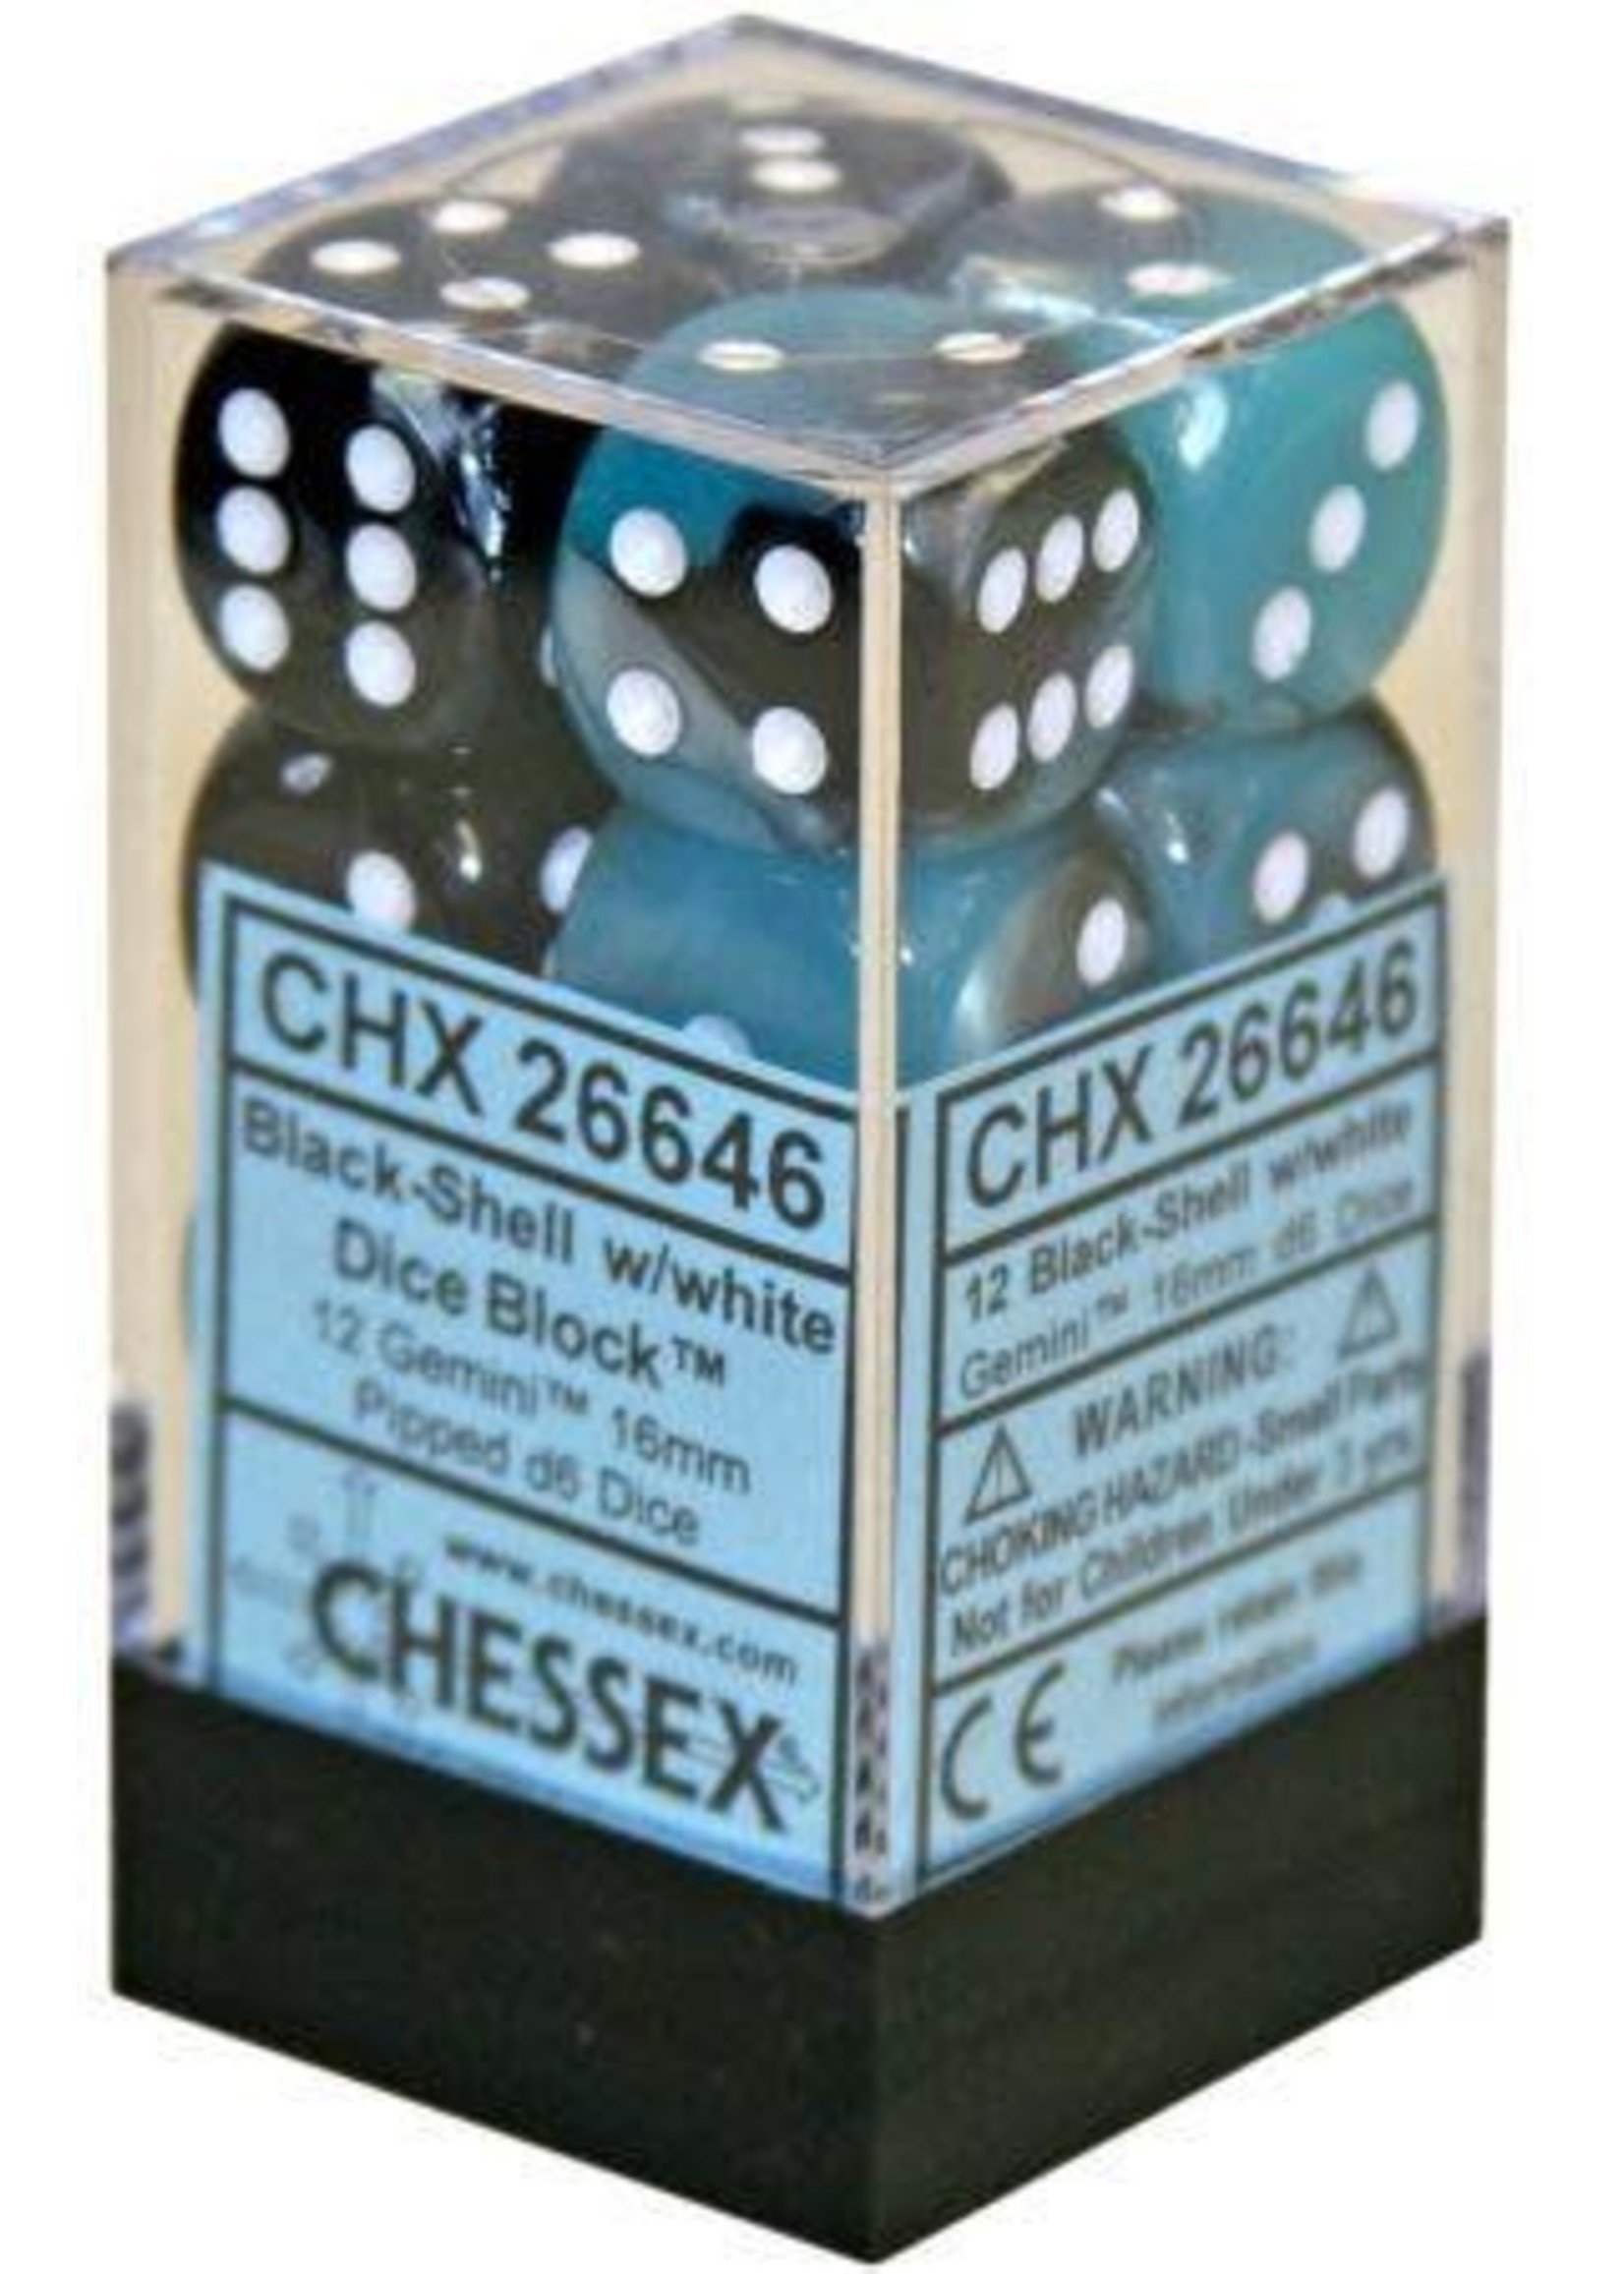 Chessex d6 Cube 16mm Gemini Black & Shell w/ White (12)